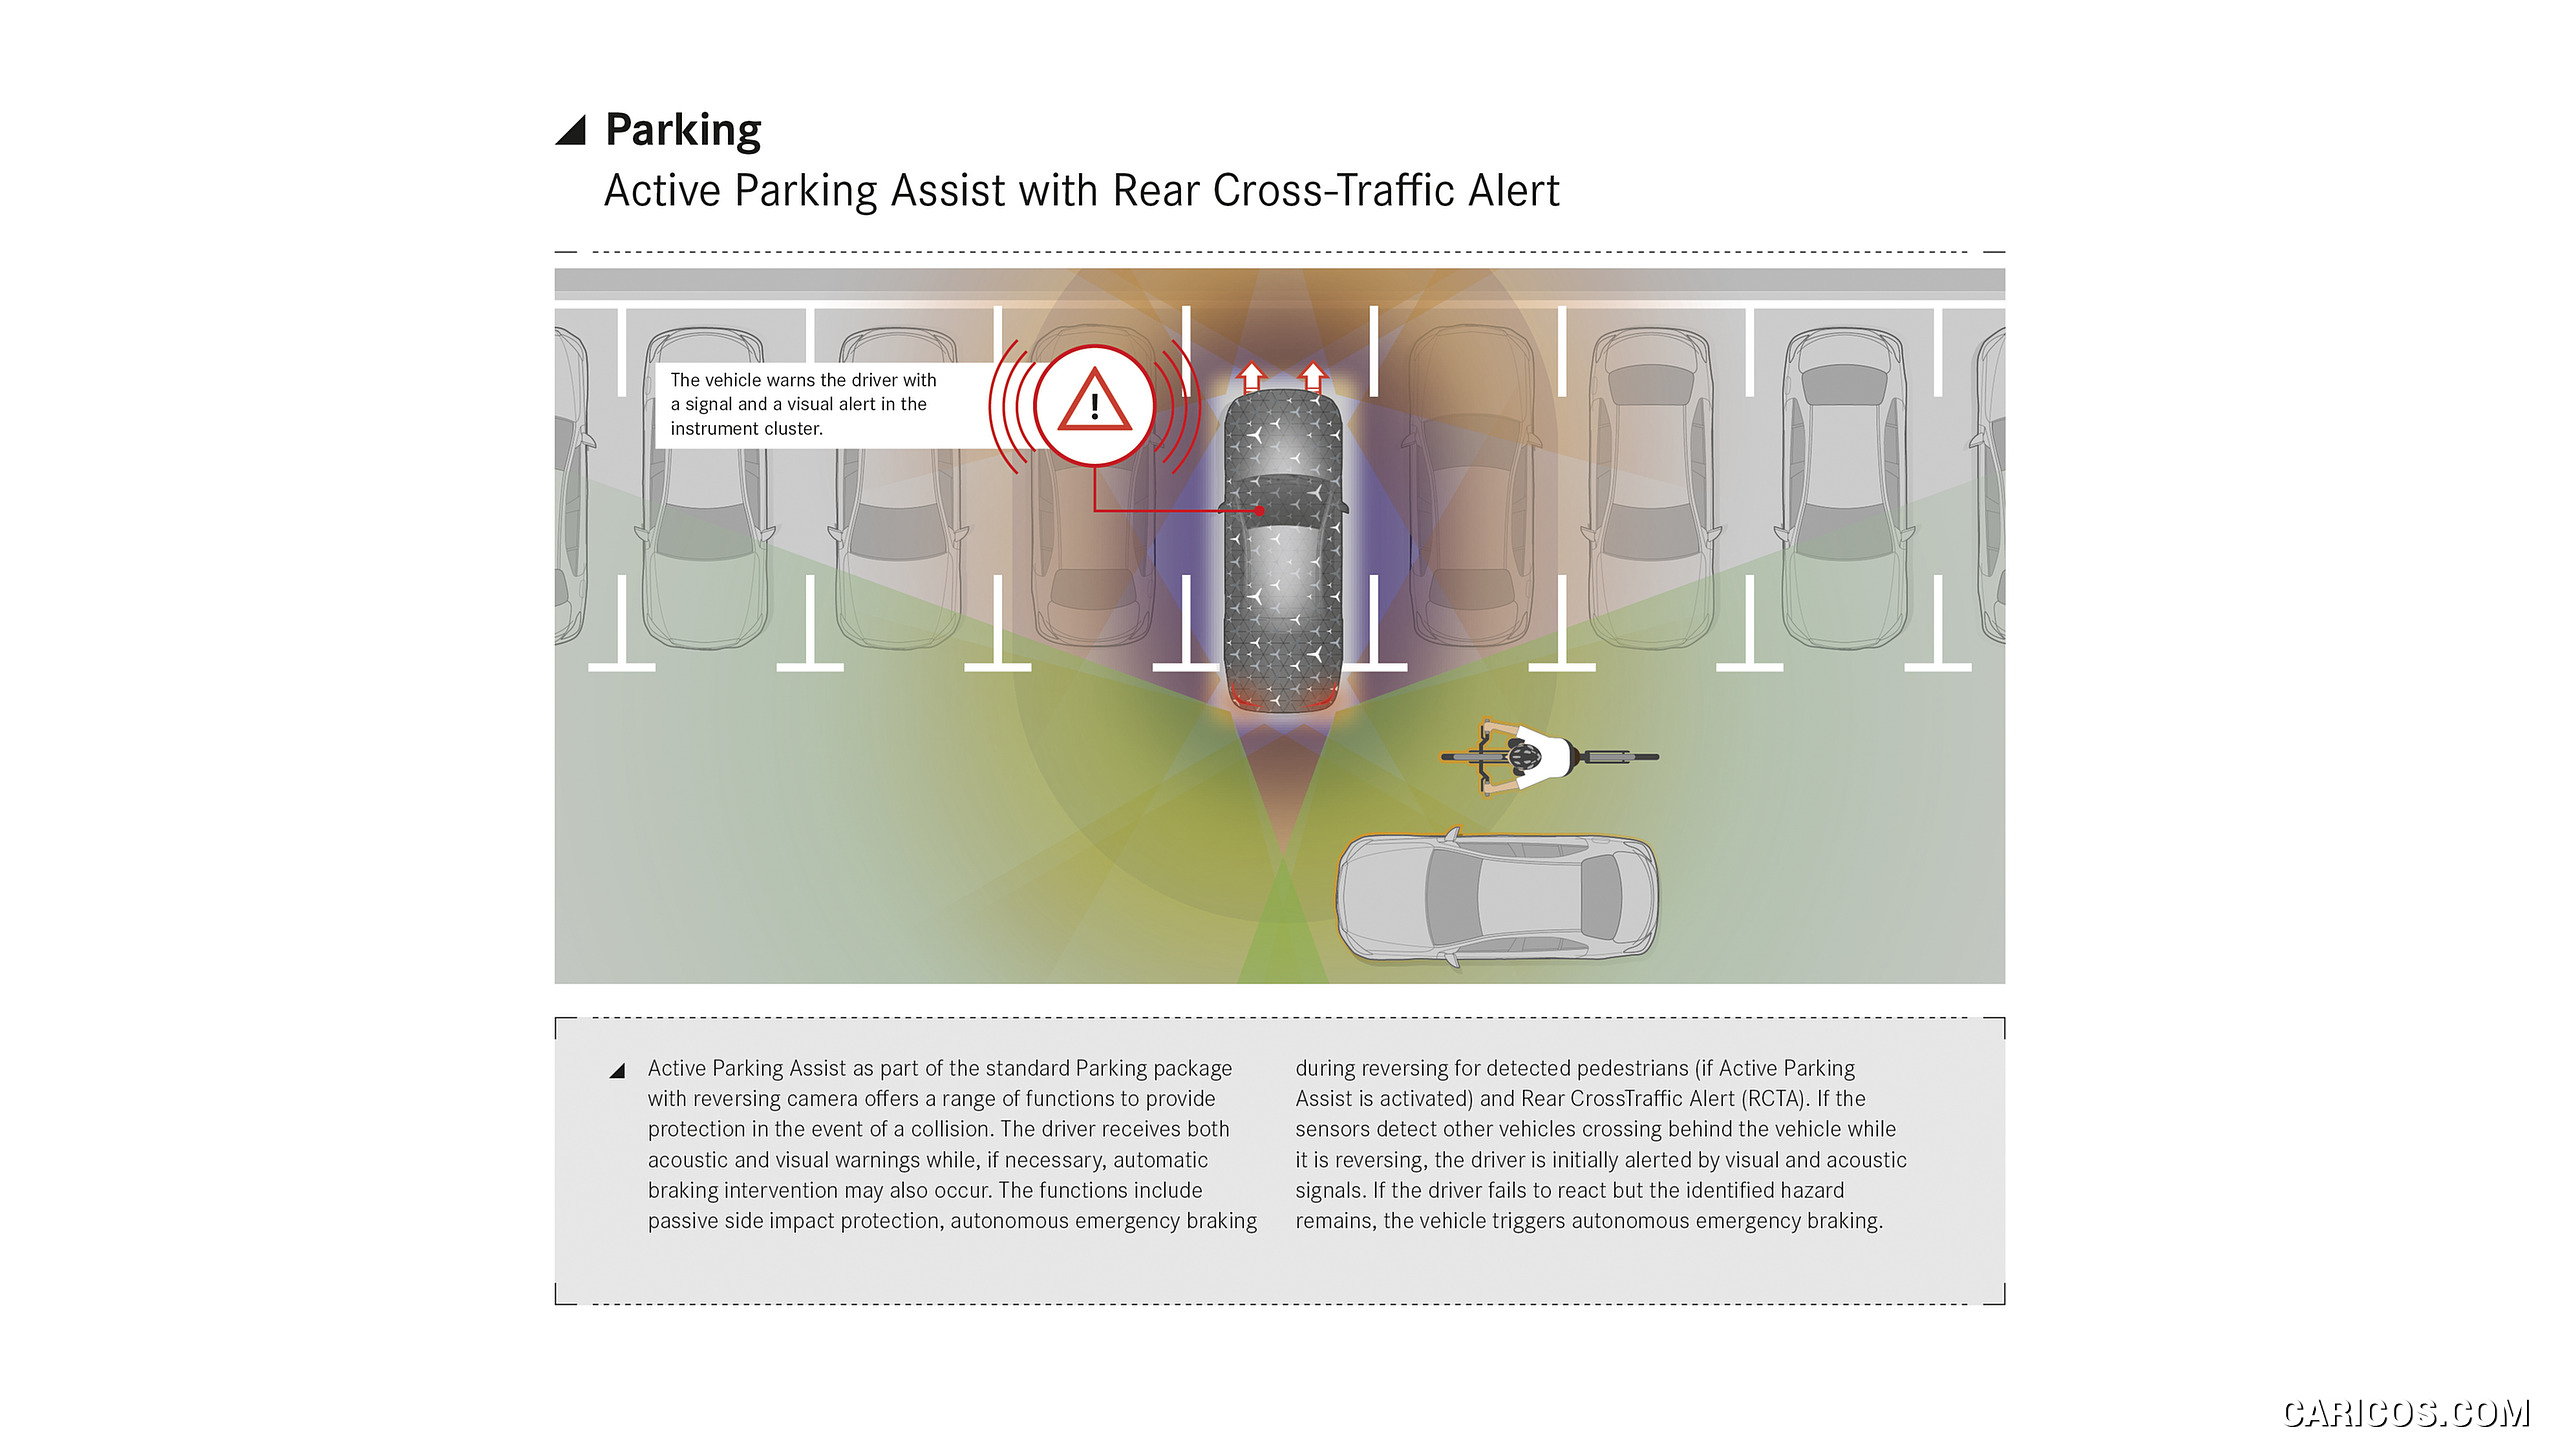 2021 Mercedes-Benz S-Class - Parking: Active Parking Assist with Rear Cross-Traffic Alert, #206 of 316